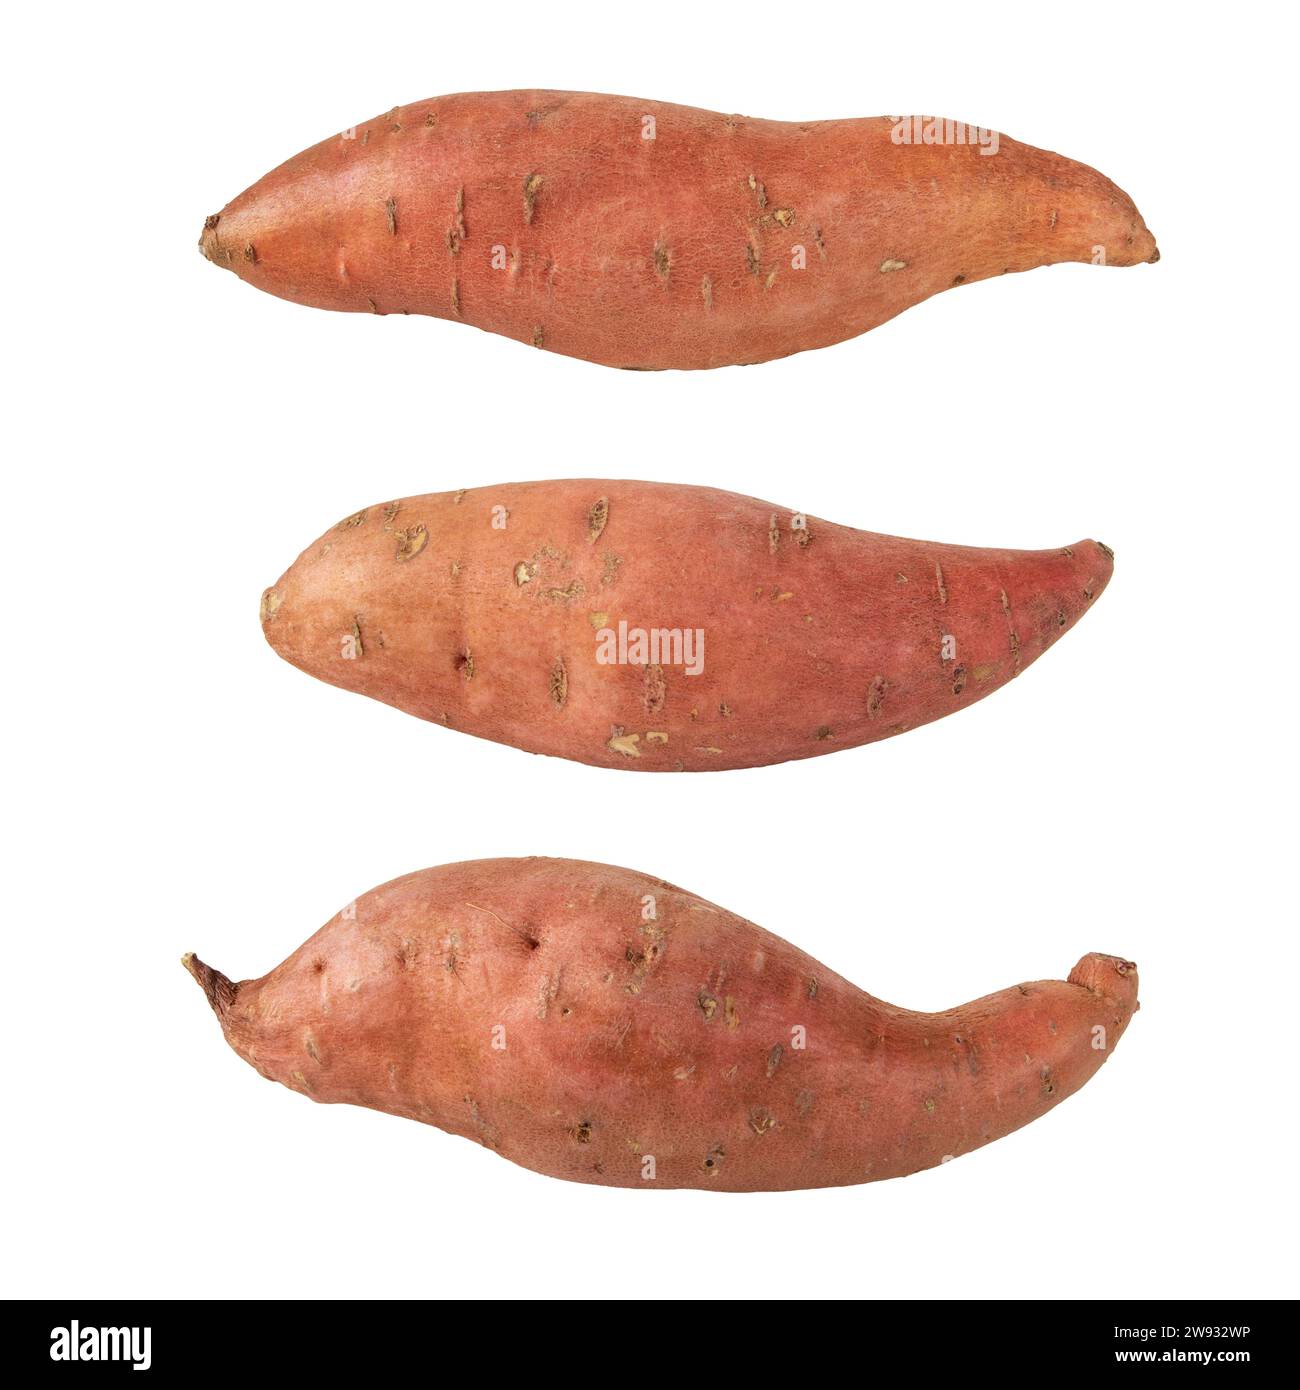 Sweet potato or sweetpotato three whole tubes with red skin isolated on white. Vegetable food staple. Stock Photo